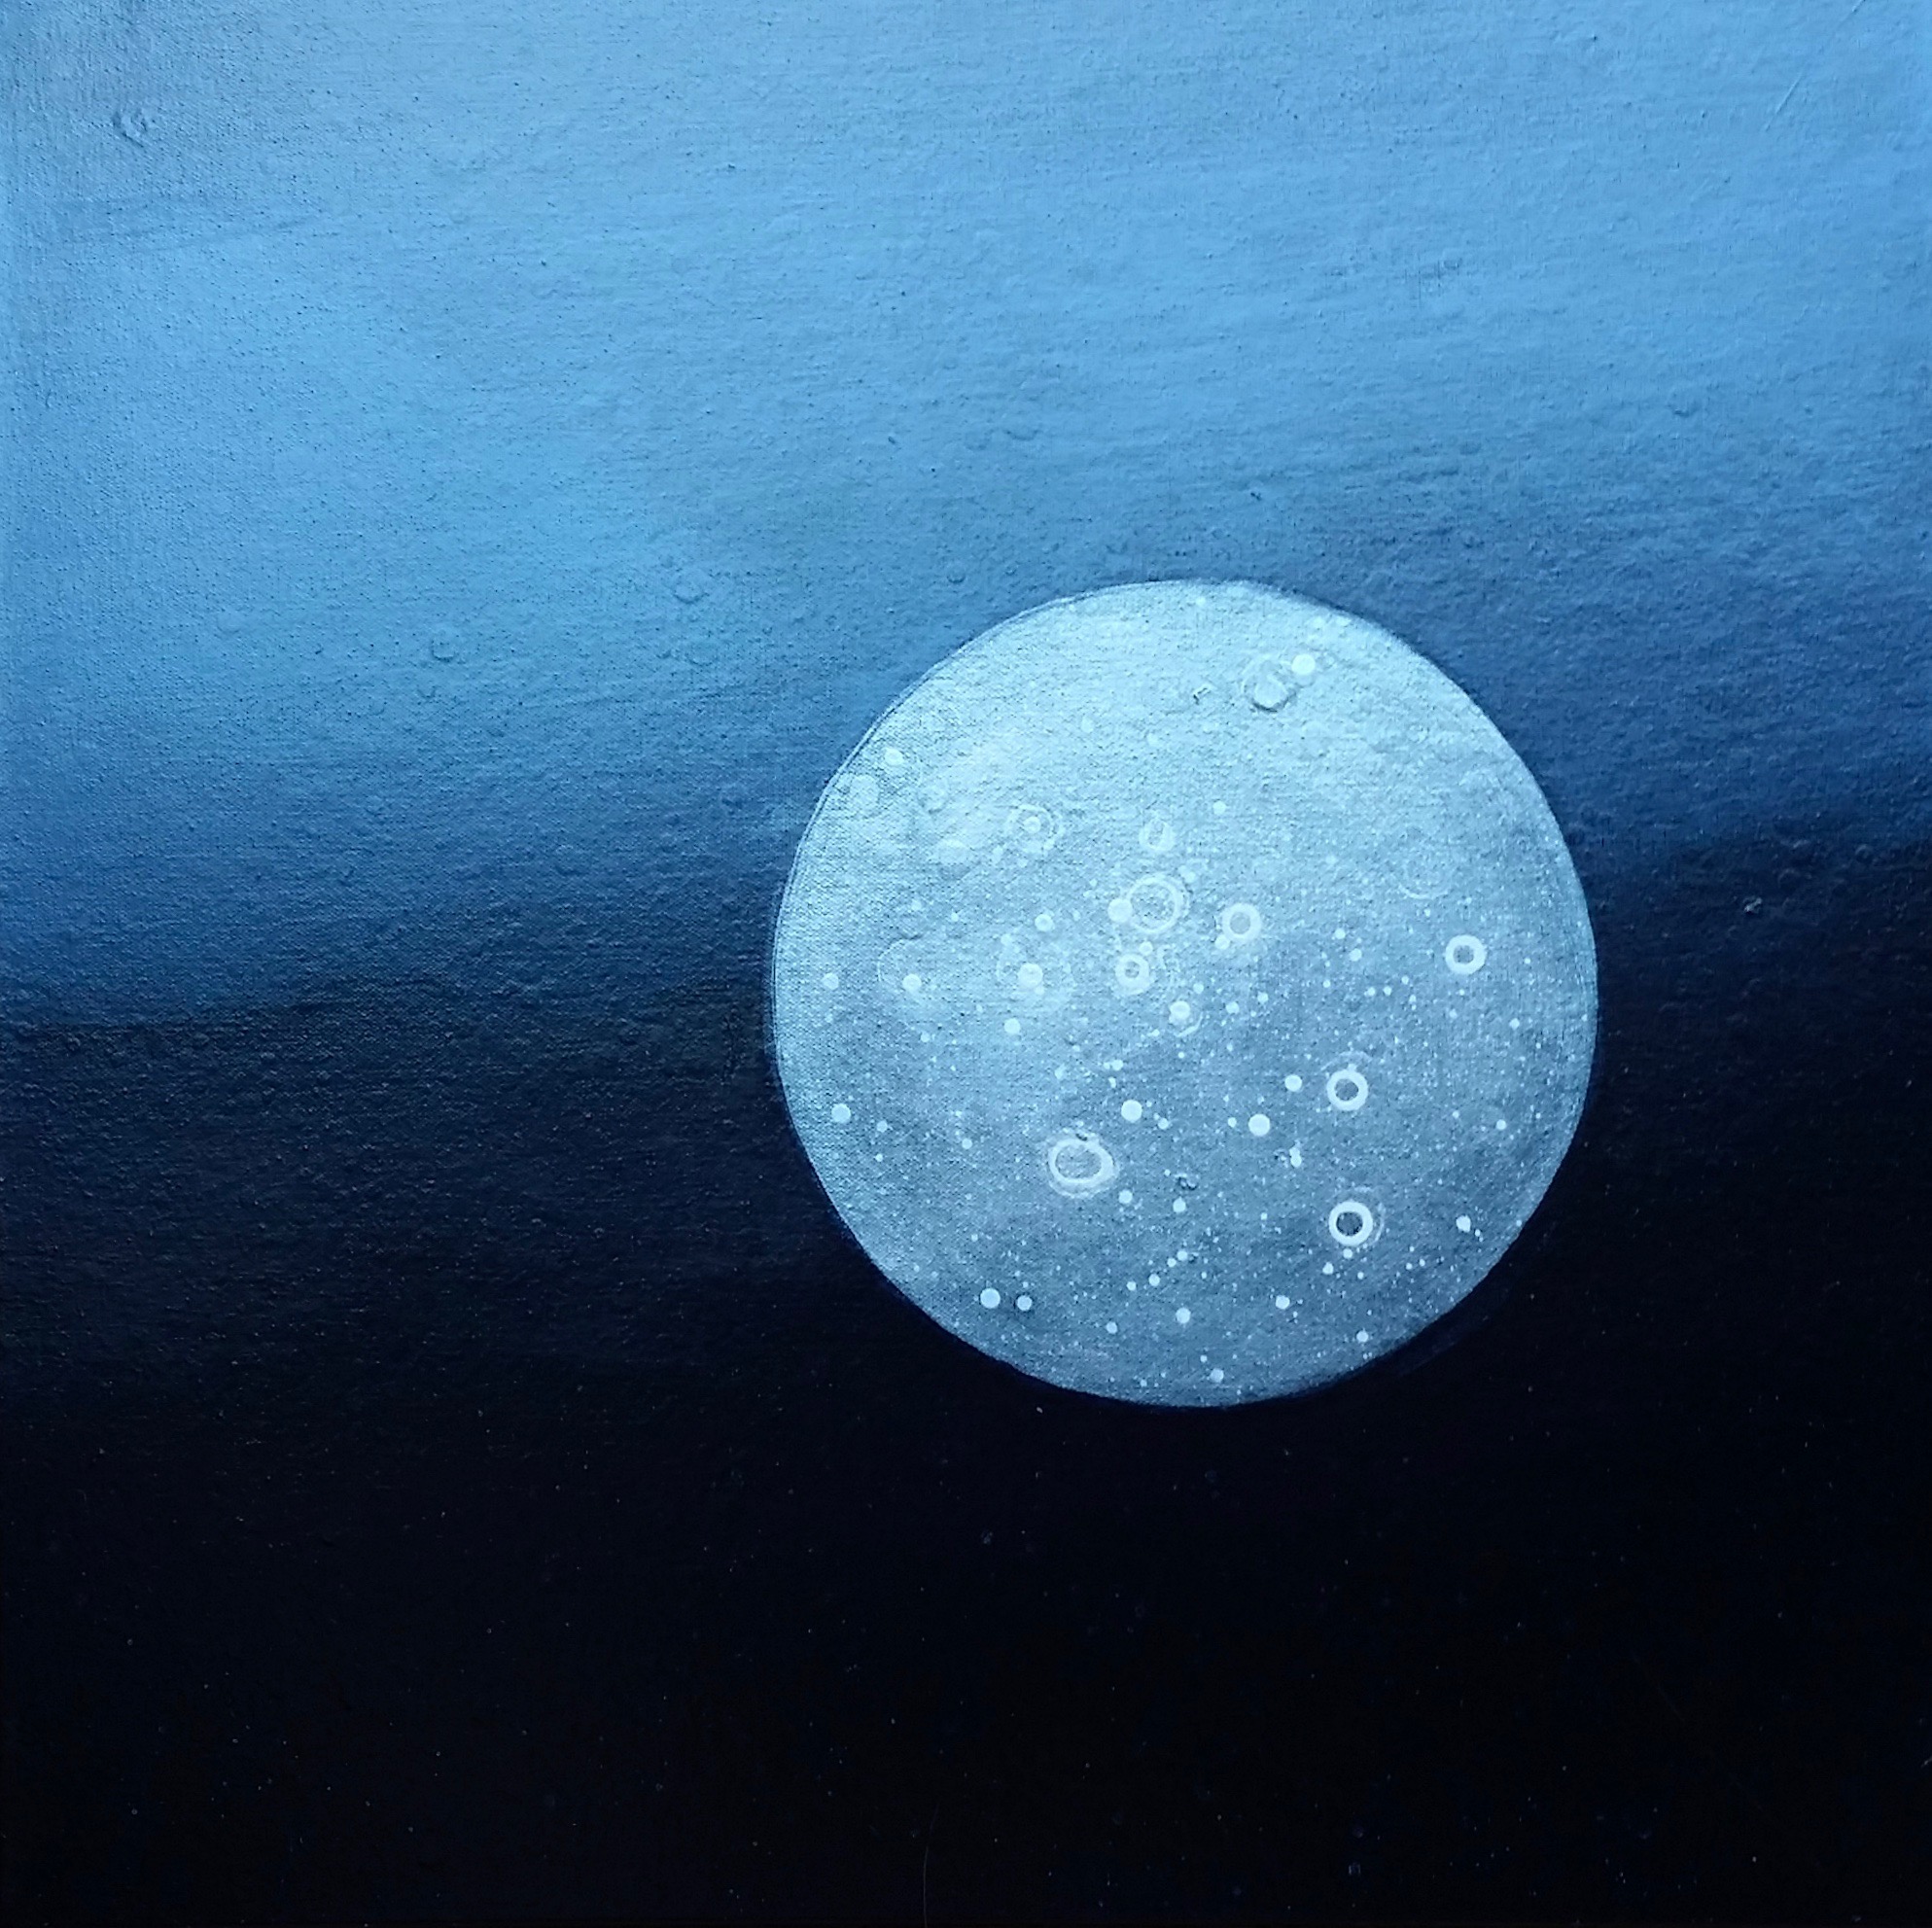  Moon, 2018 24 x 24 inches Acrylic on canvas 